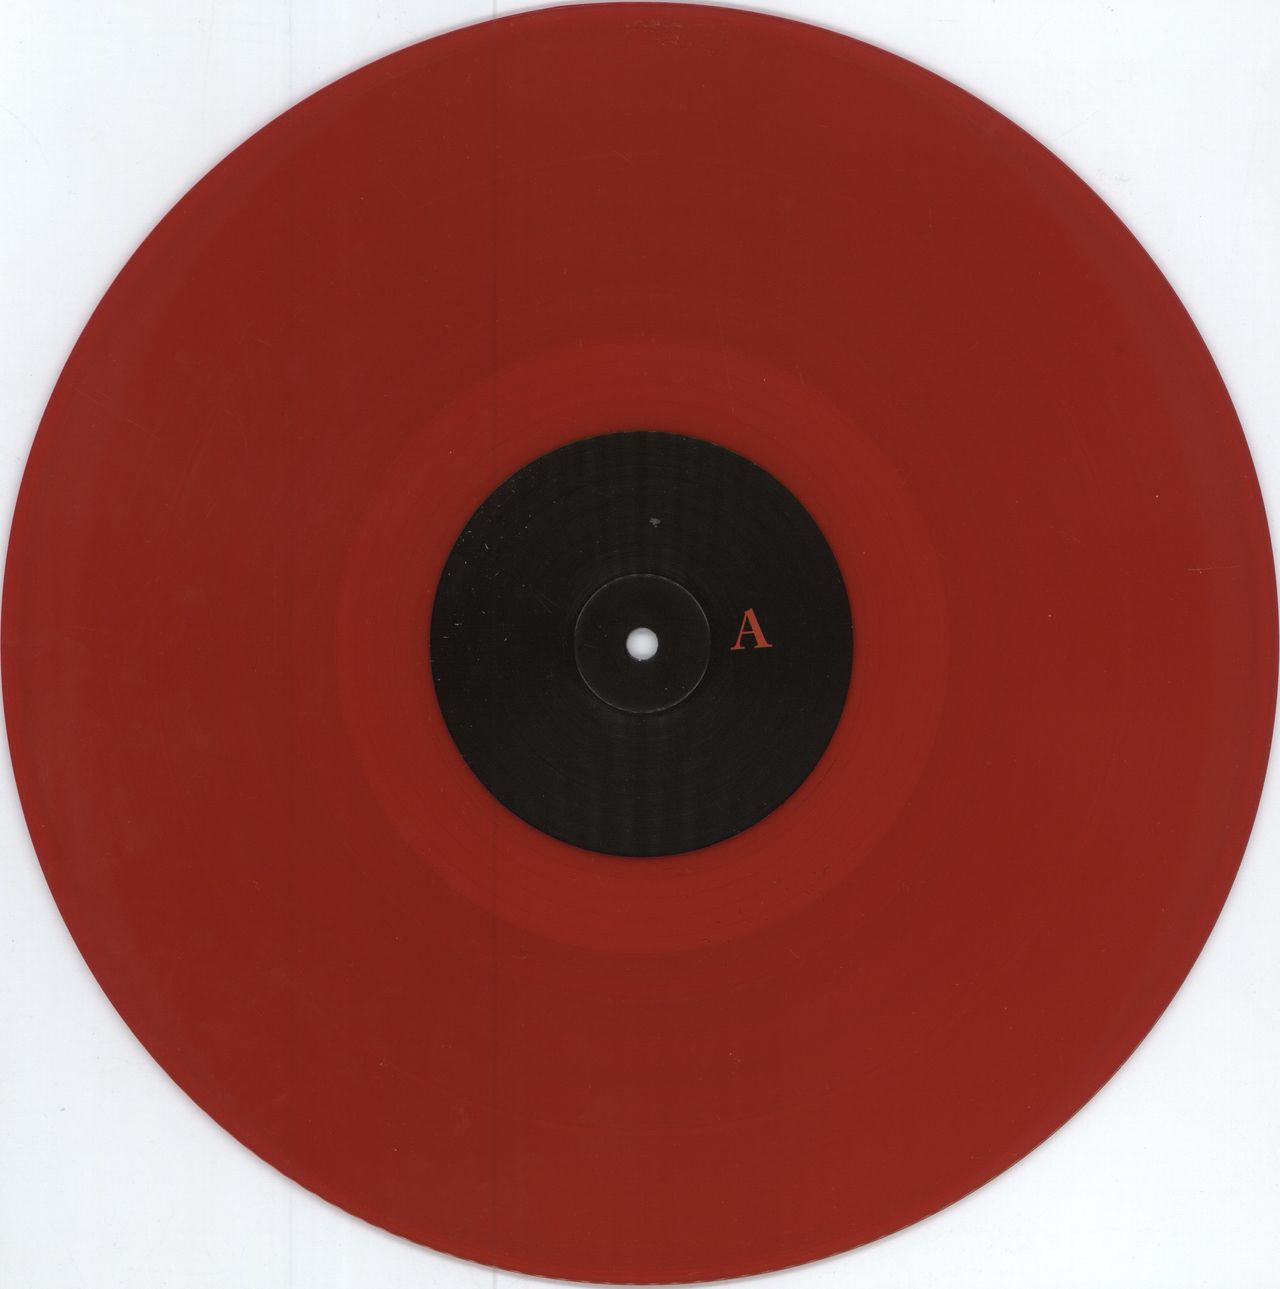 Antwon Double Ecstasy - Red Vinyl US 12" vinyl single (12 inch record / Maxi-single) 3T312DO785031